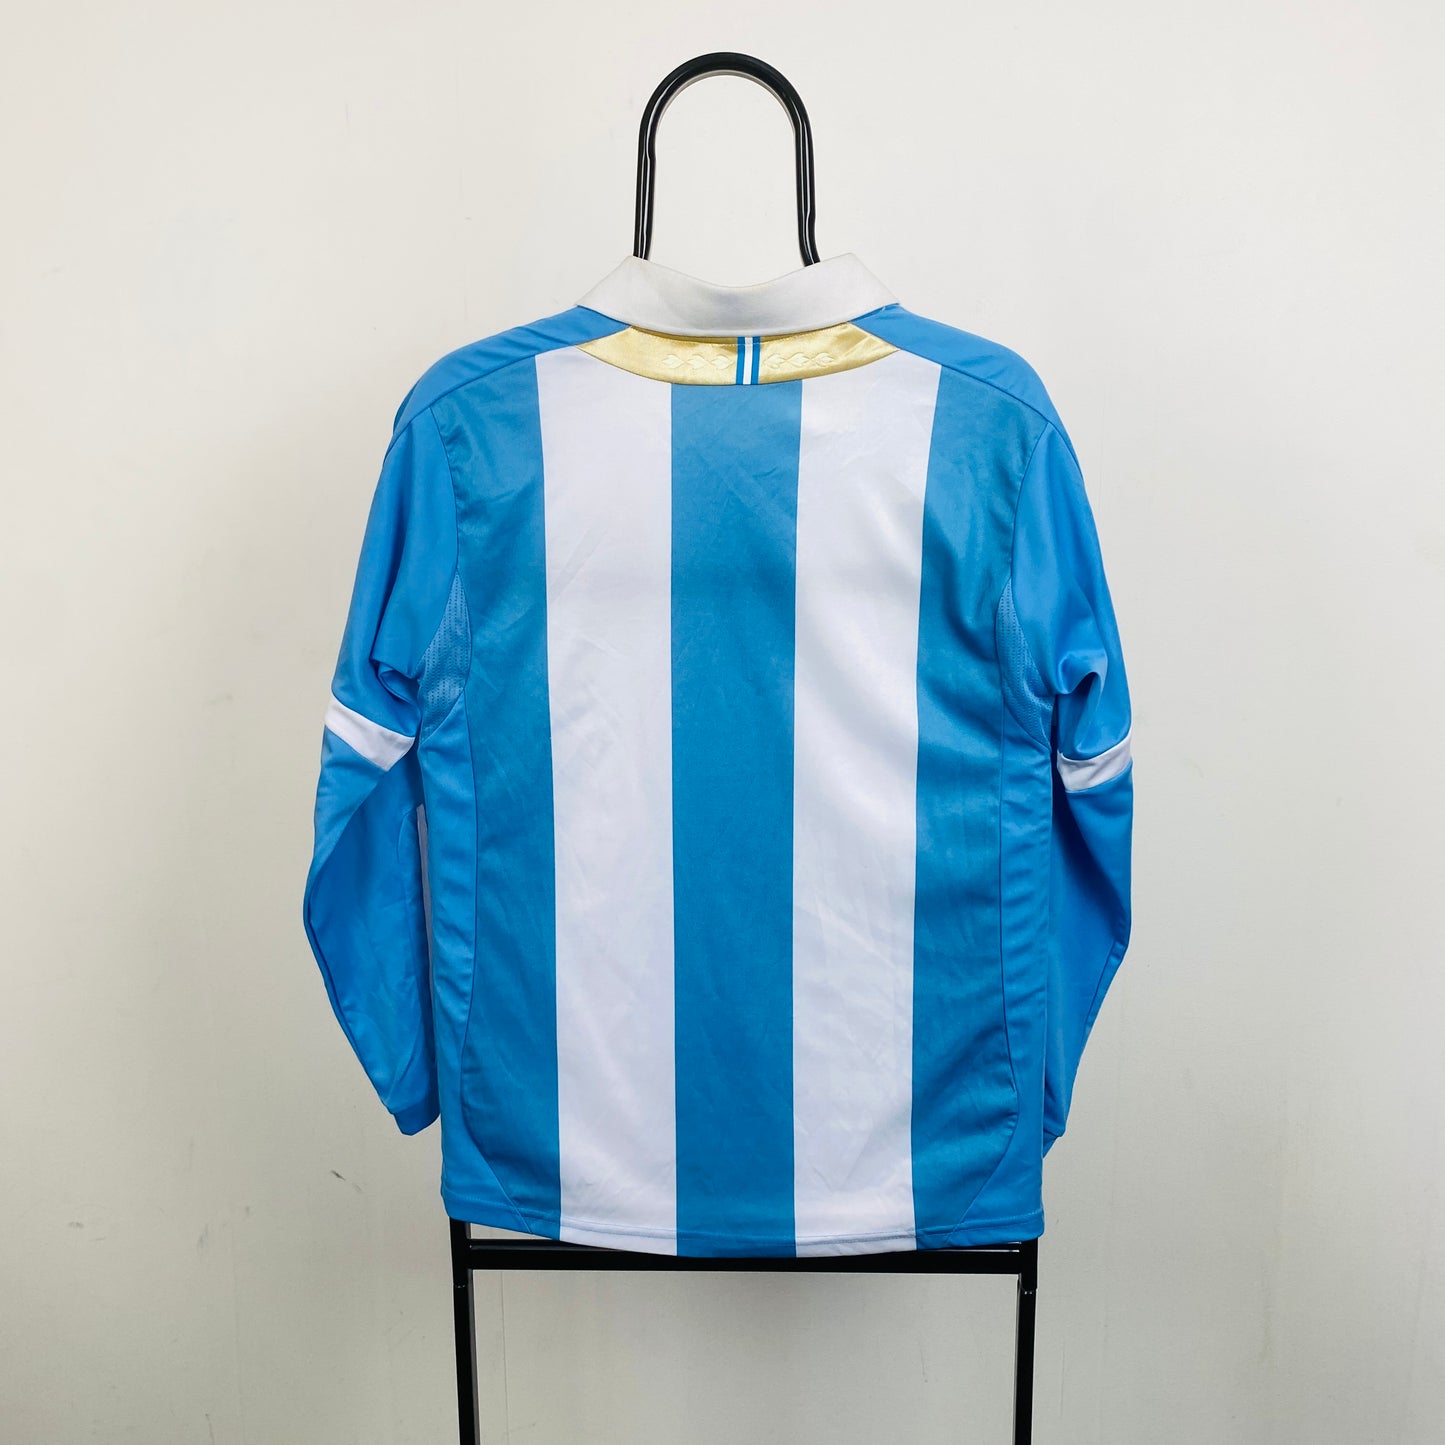 Retro Argentina Football Shirt T-Shirt Blue Small